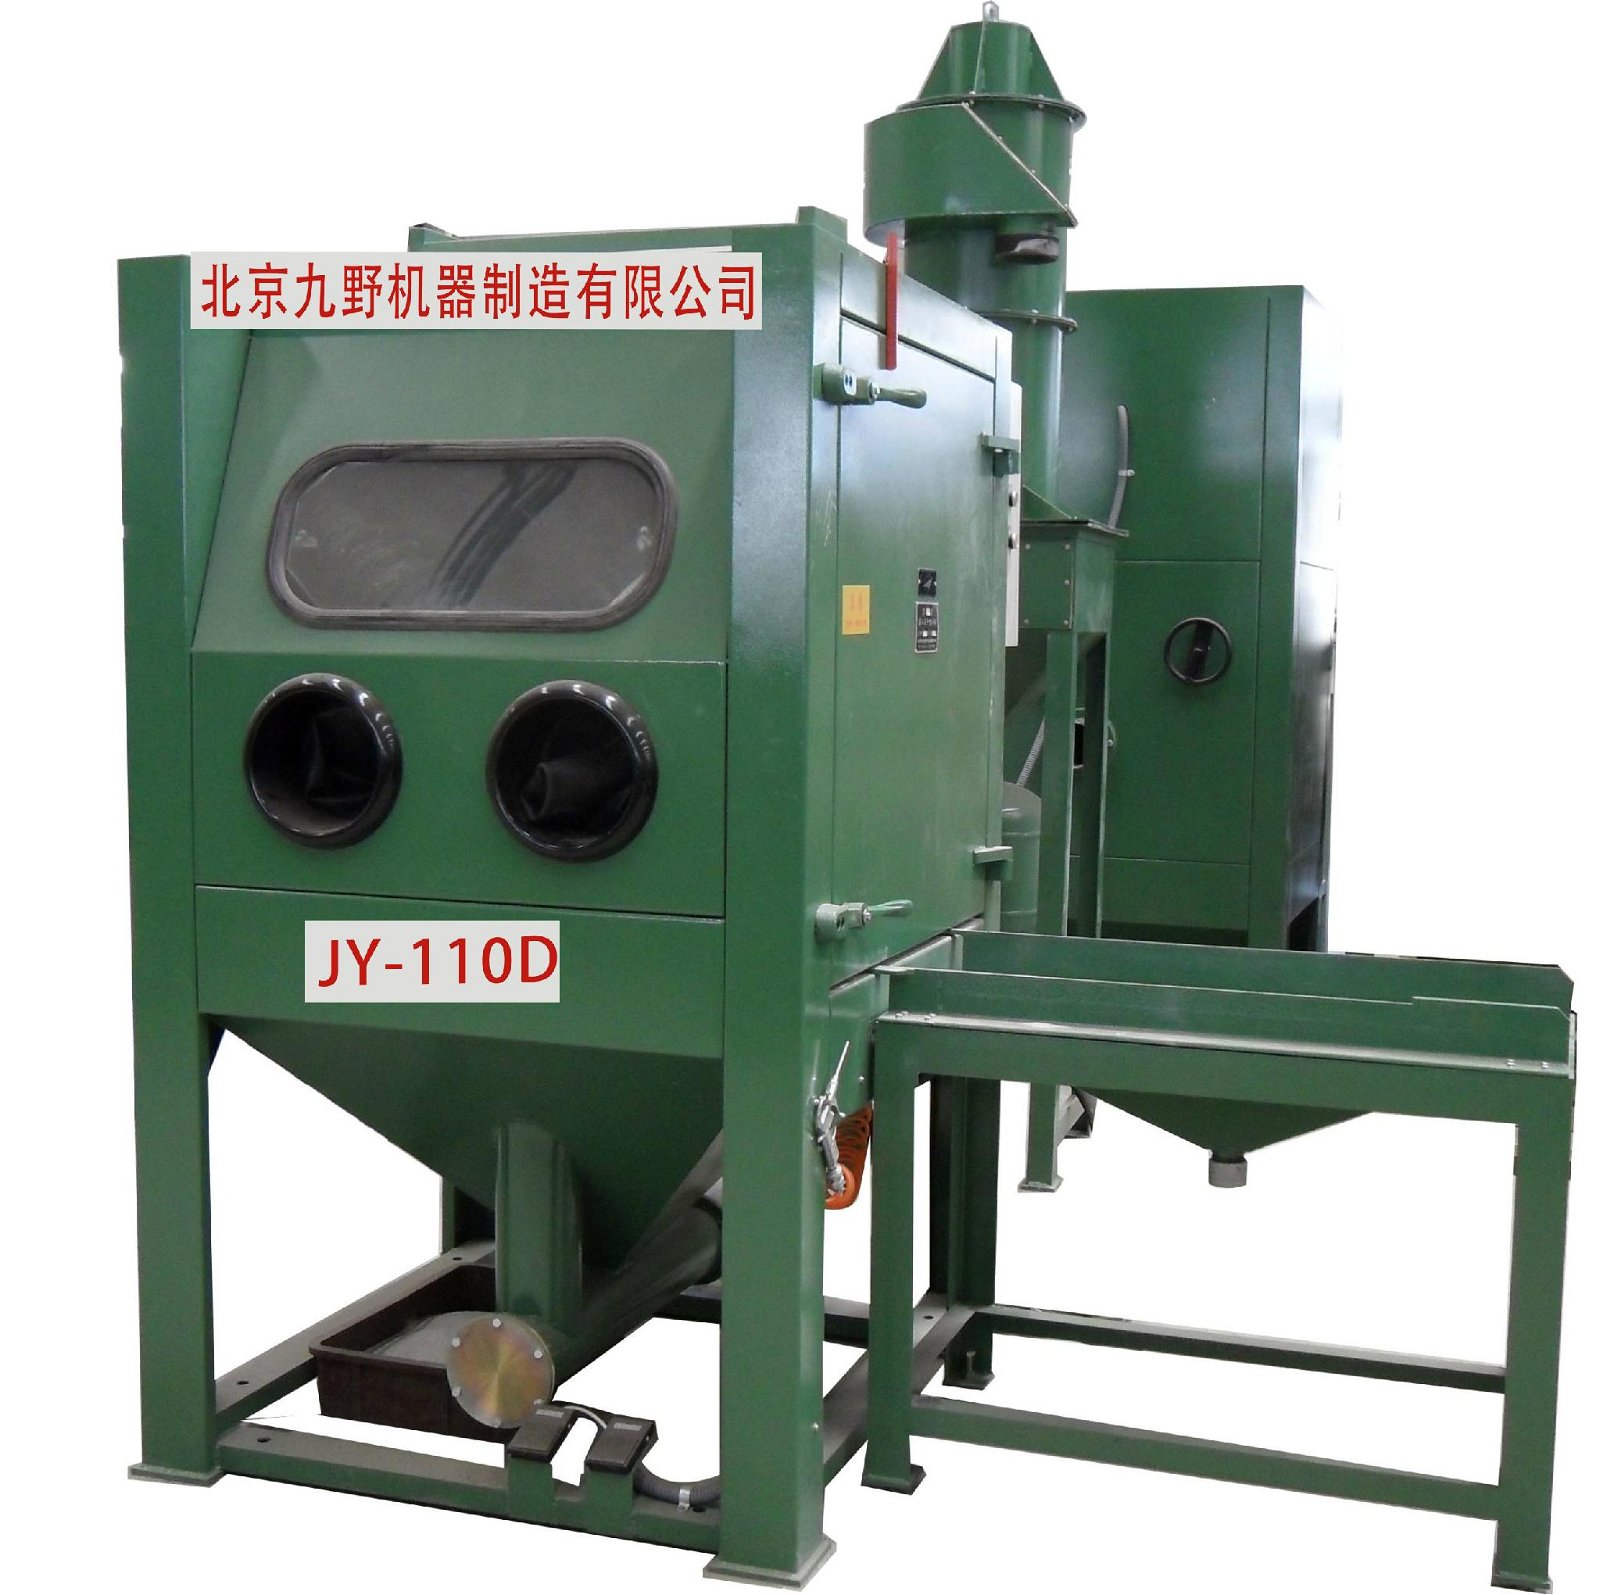 GY - 3 turntable type pressed dry sandblasting machine 4